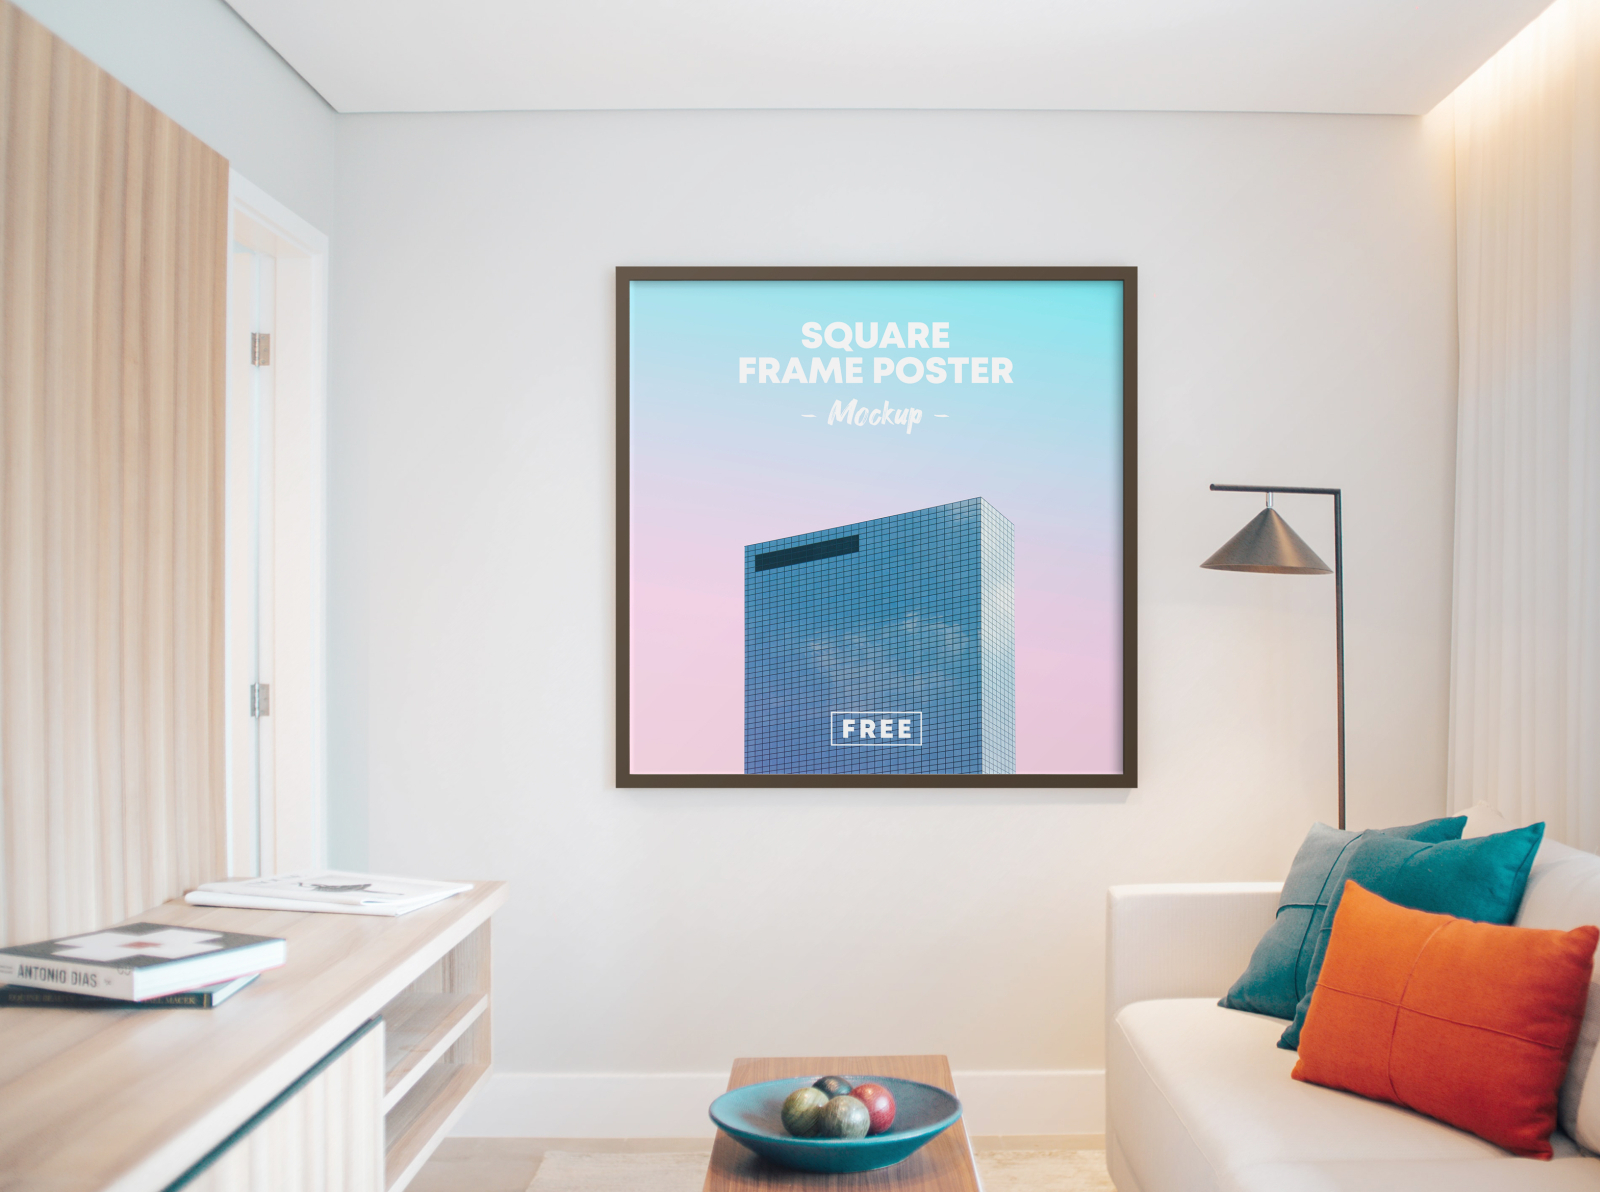 Download Square Poster Frame On Room Free Mockup By Pixelsdesign Net On Dribbble